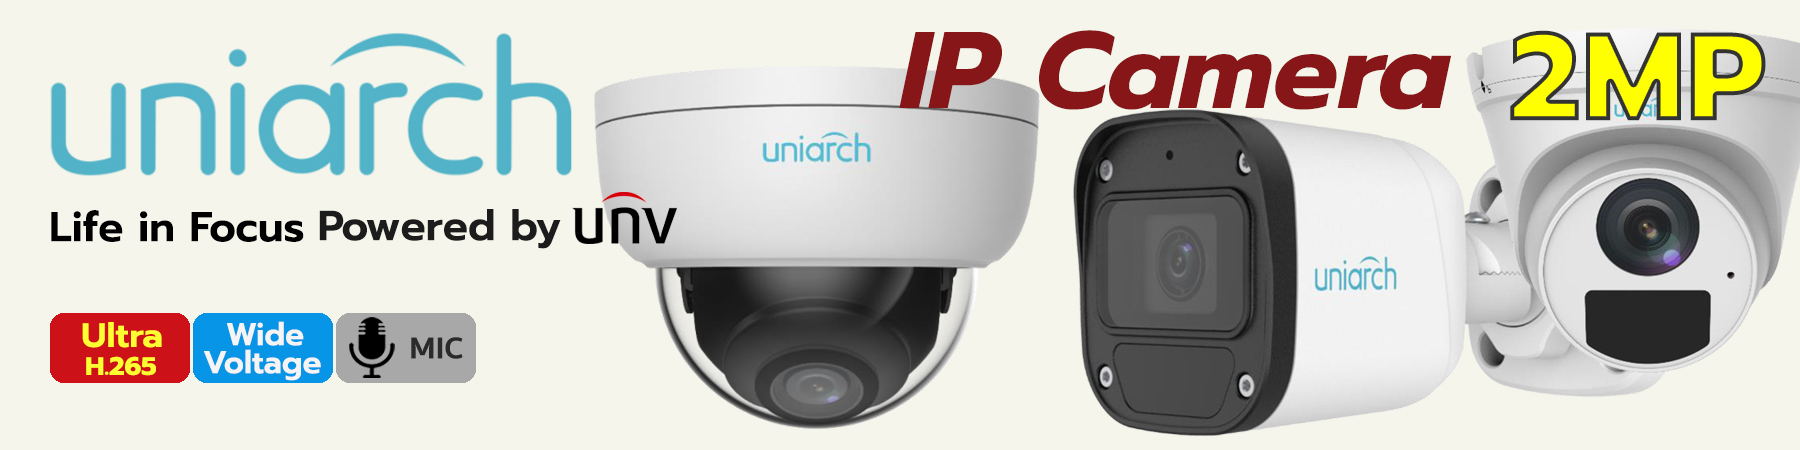 Uniarch IPC, Uniarch IP Camera, กล้องวงจรปิด Uniarch, IPC-B122-APF28, IPC-B122-APF40, IPC-T122-APF28, IPC-T122-APF40, IPC-D122-PF28, IPC-D122-PF40, IPC-B312-APKZ, IPC-D312-APKZ